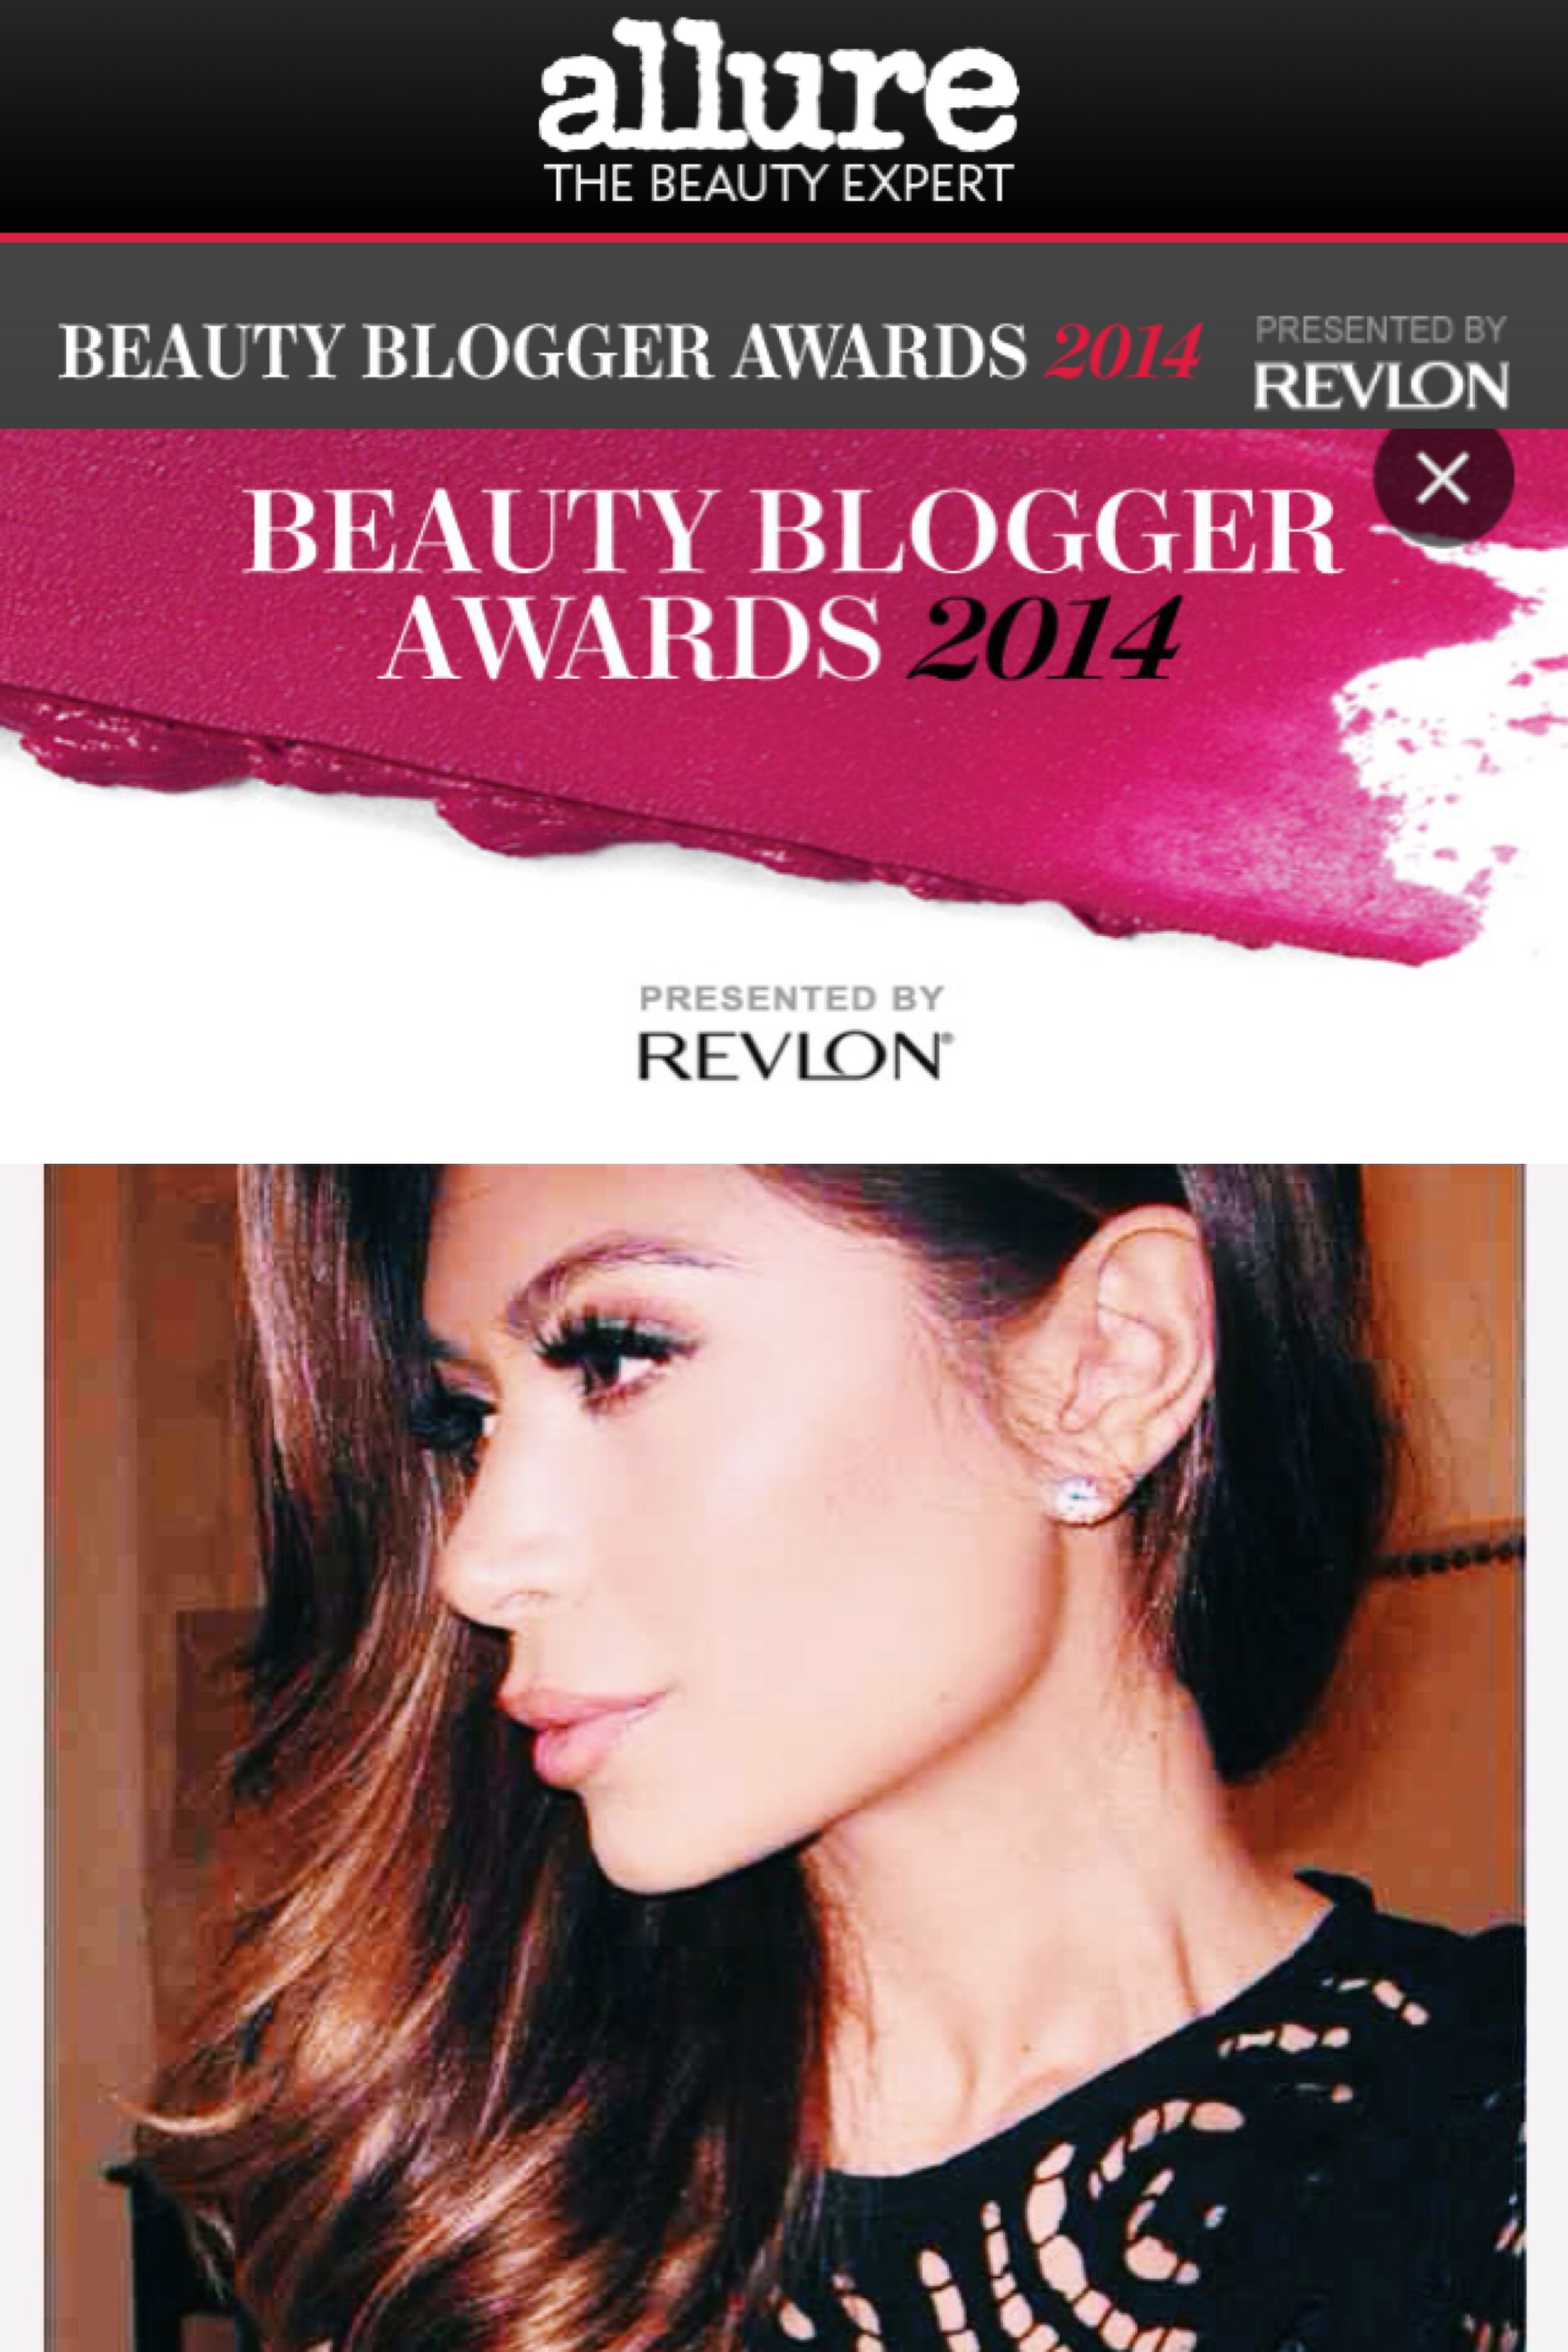 Allure Magazine’s Beauty Blogger Awards